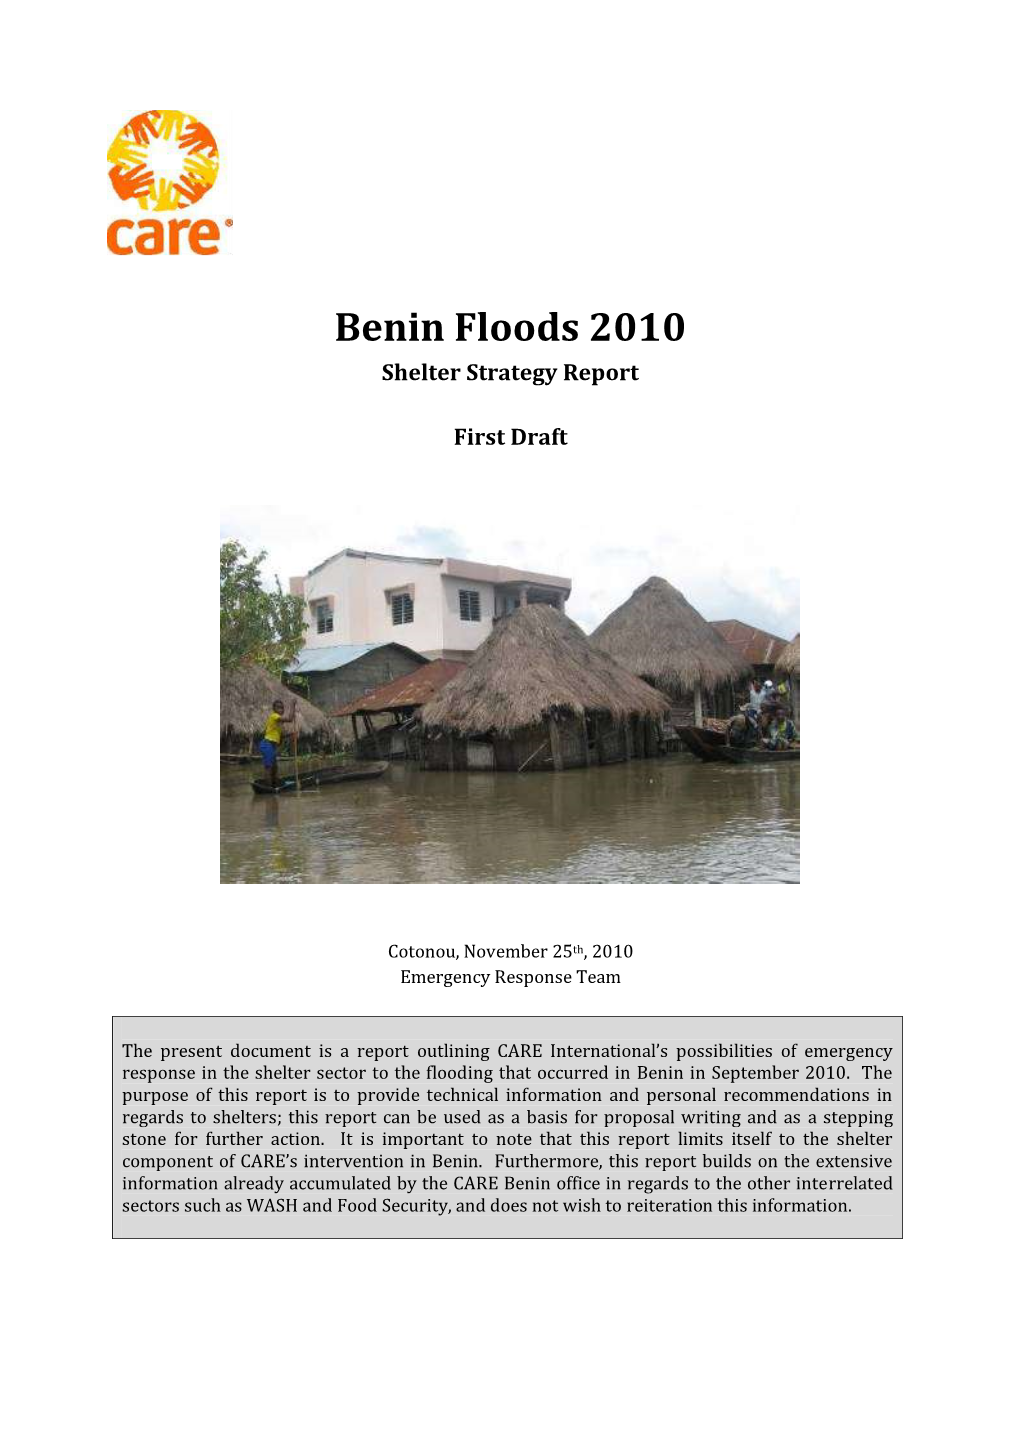 Benin Floods 2010 Shelter Strategy Report